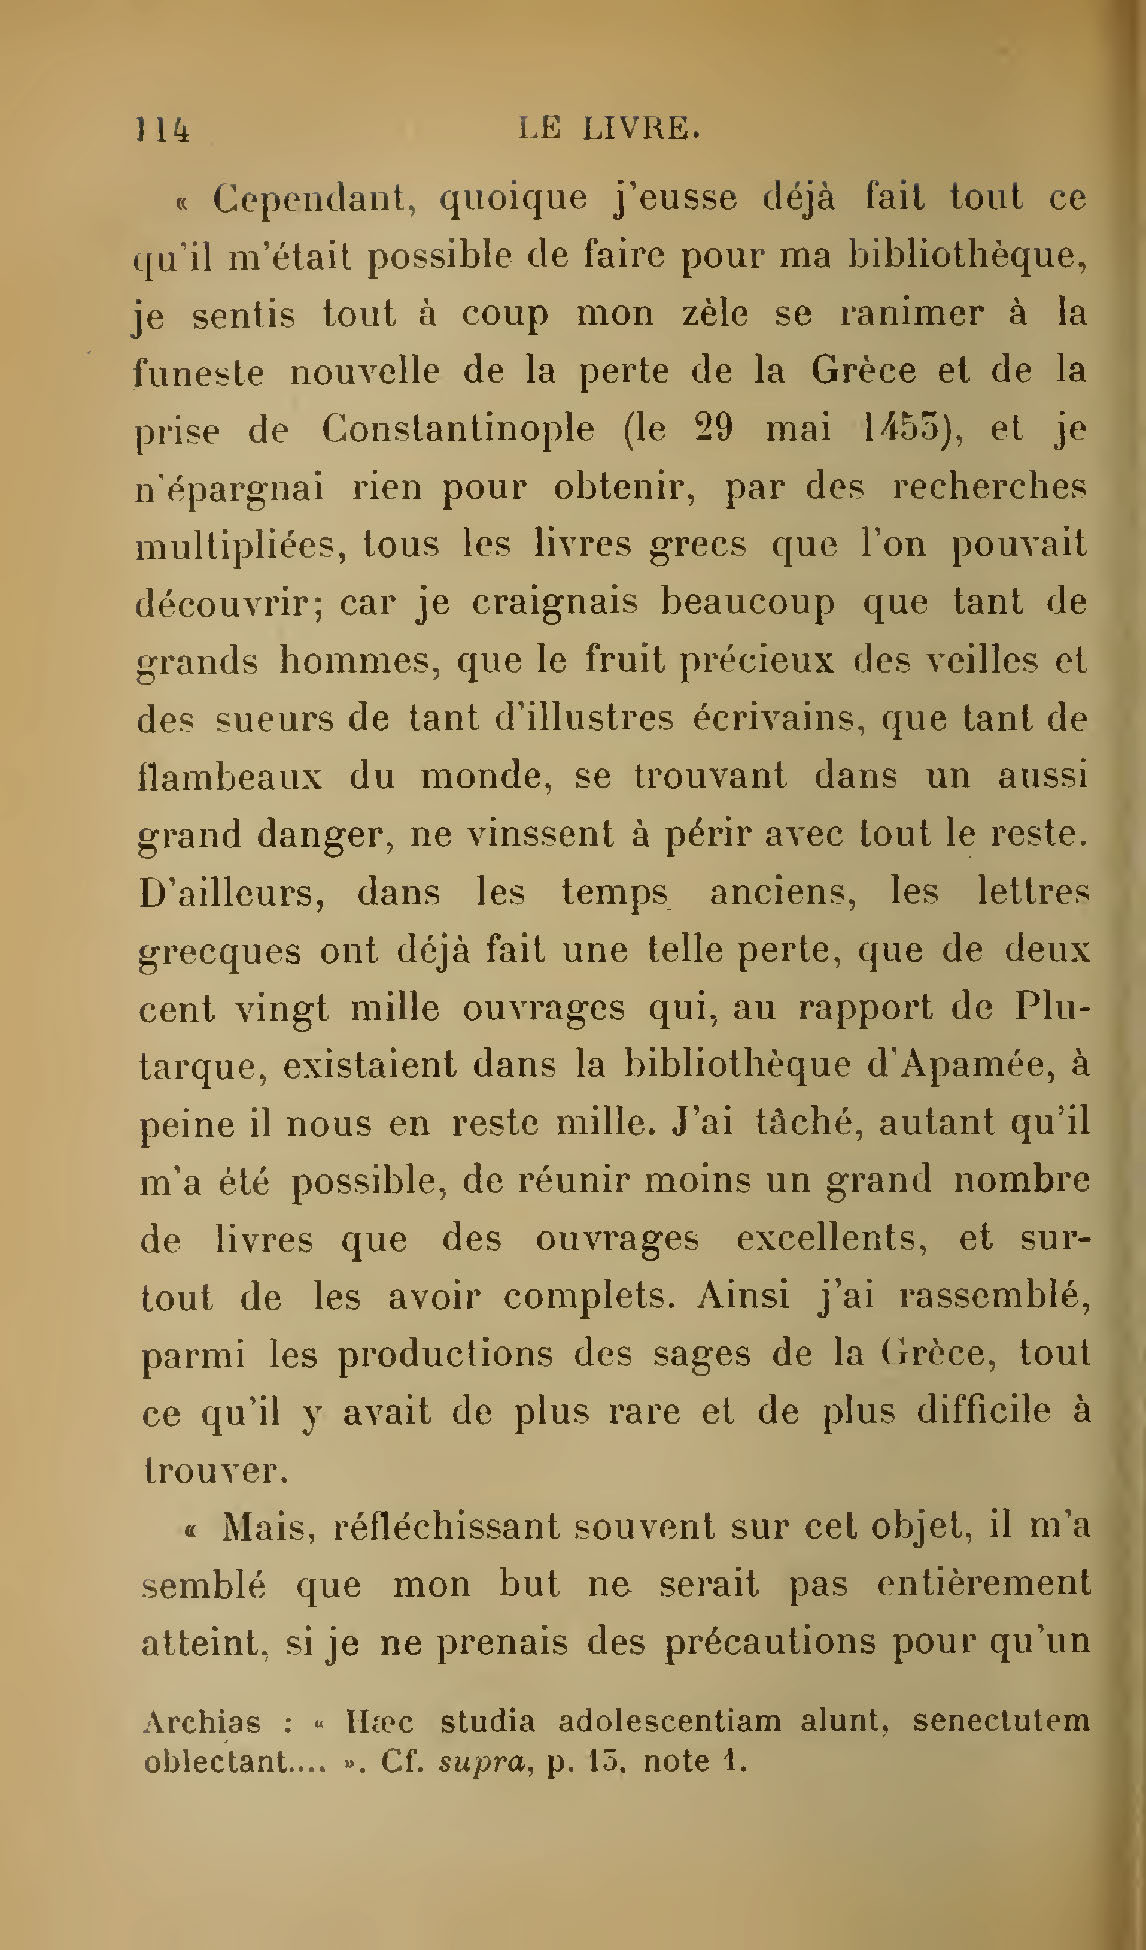 Albert Cim, Le Livre, t. I, p. 114.